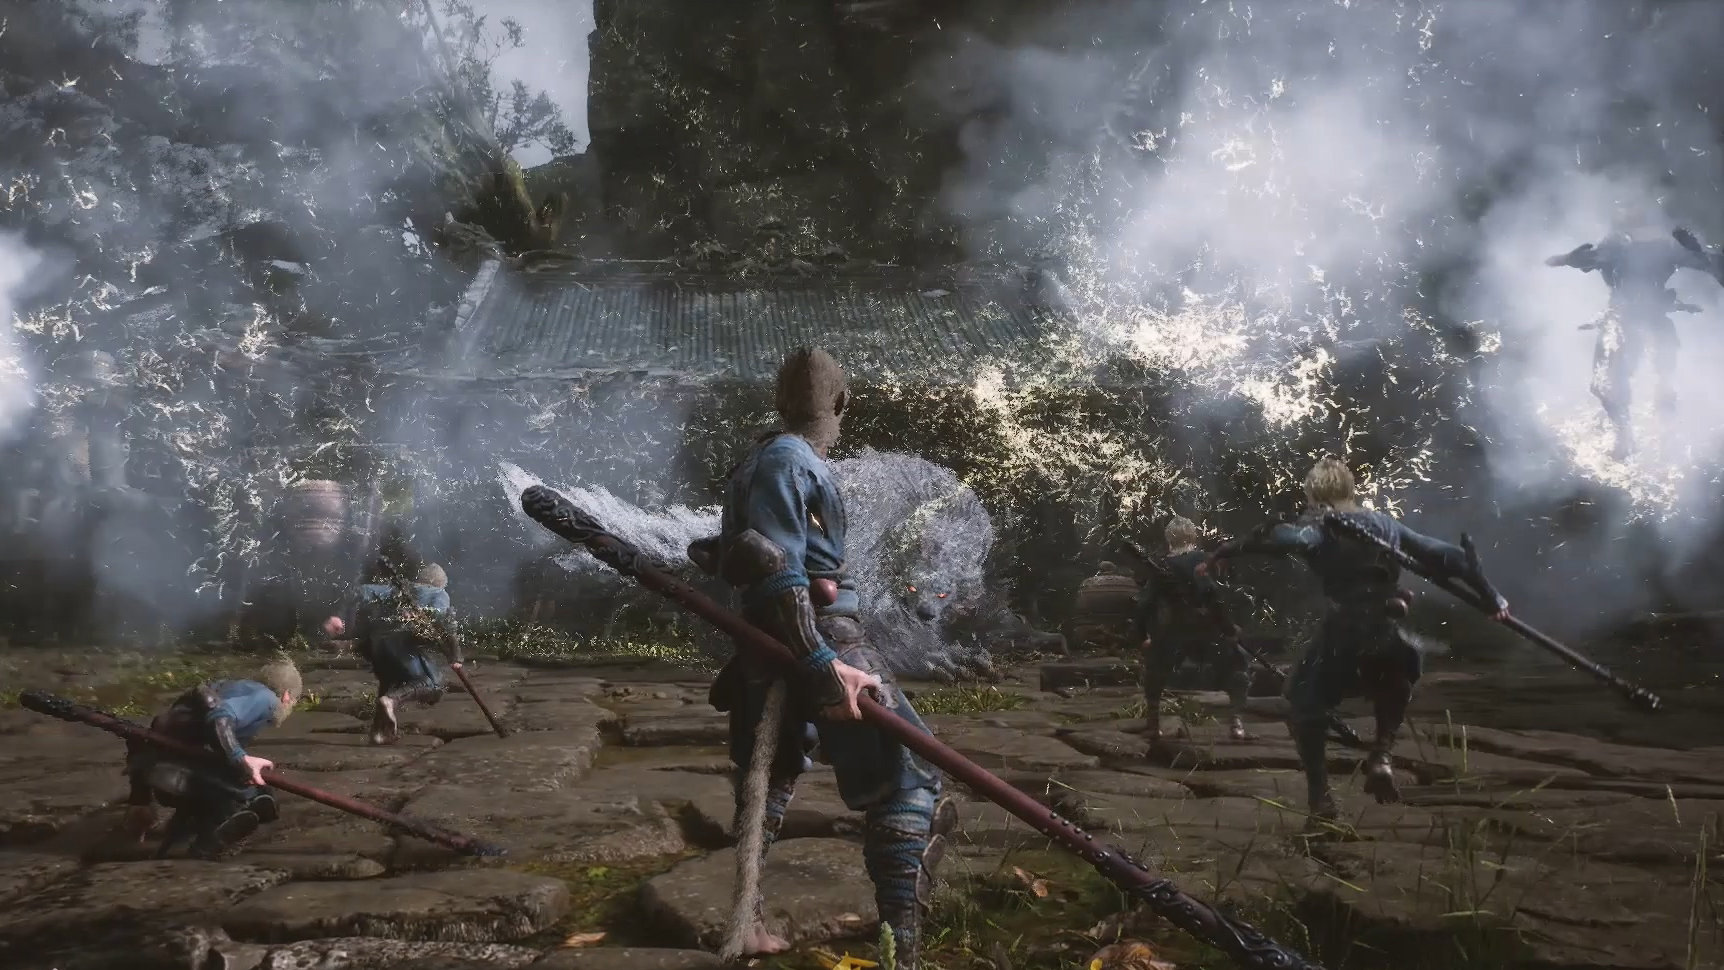 Black Myth: Wukong Trailer Has Captured the Internet's Imagination | Den of Geek